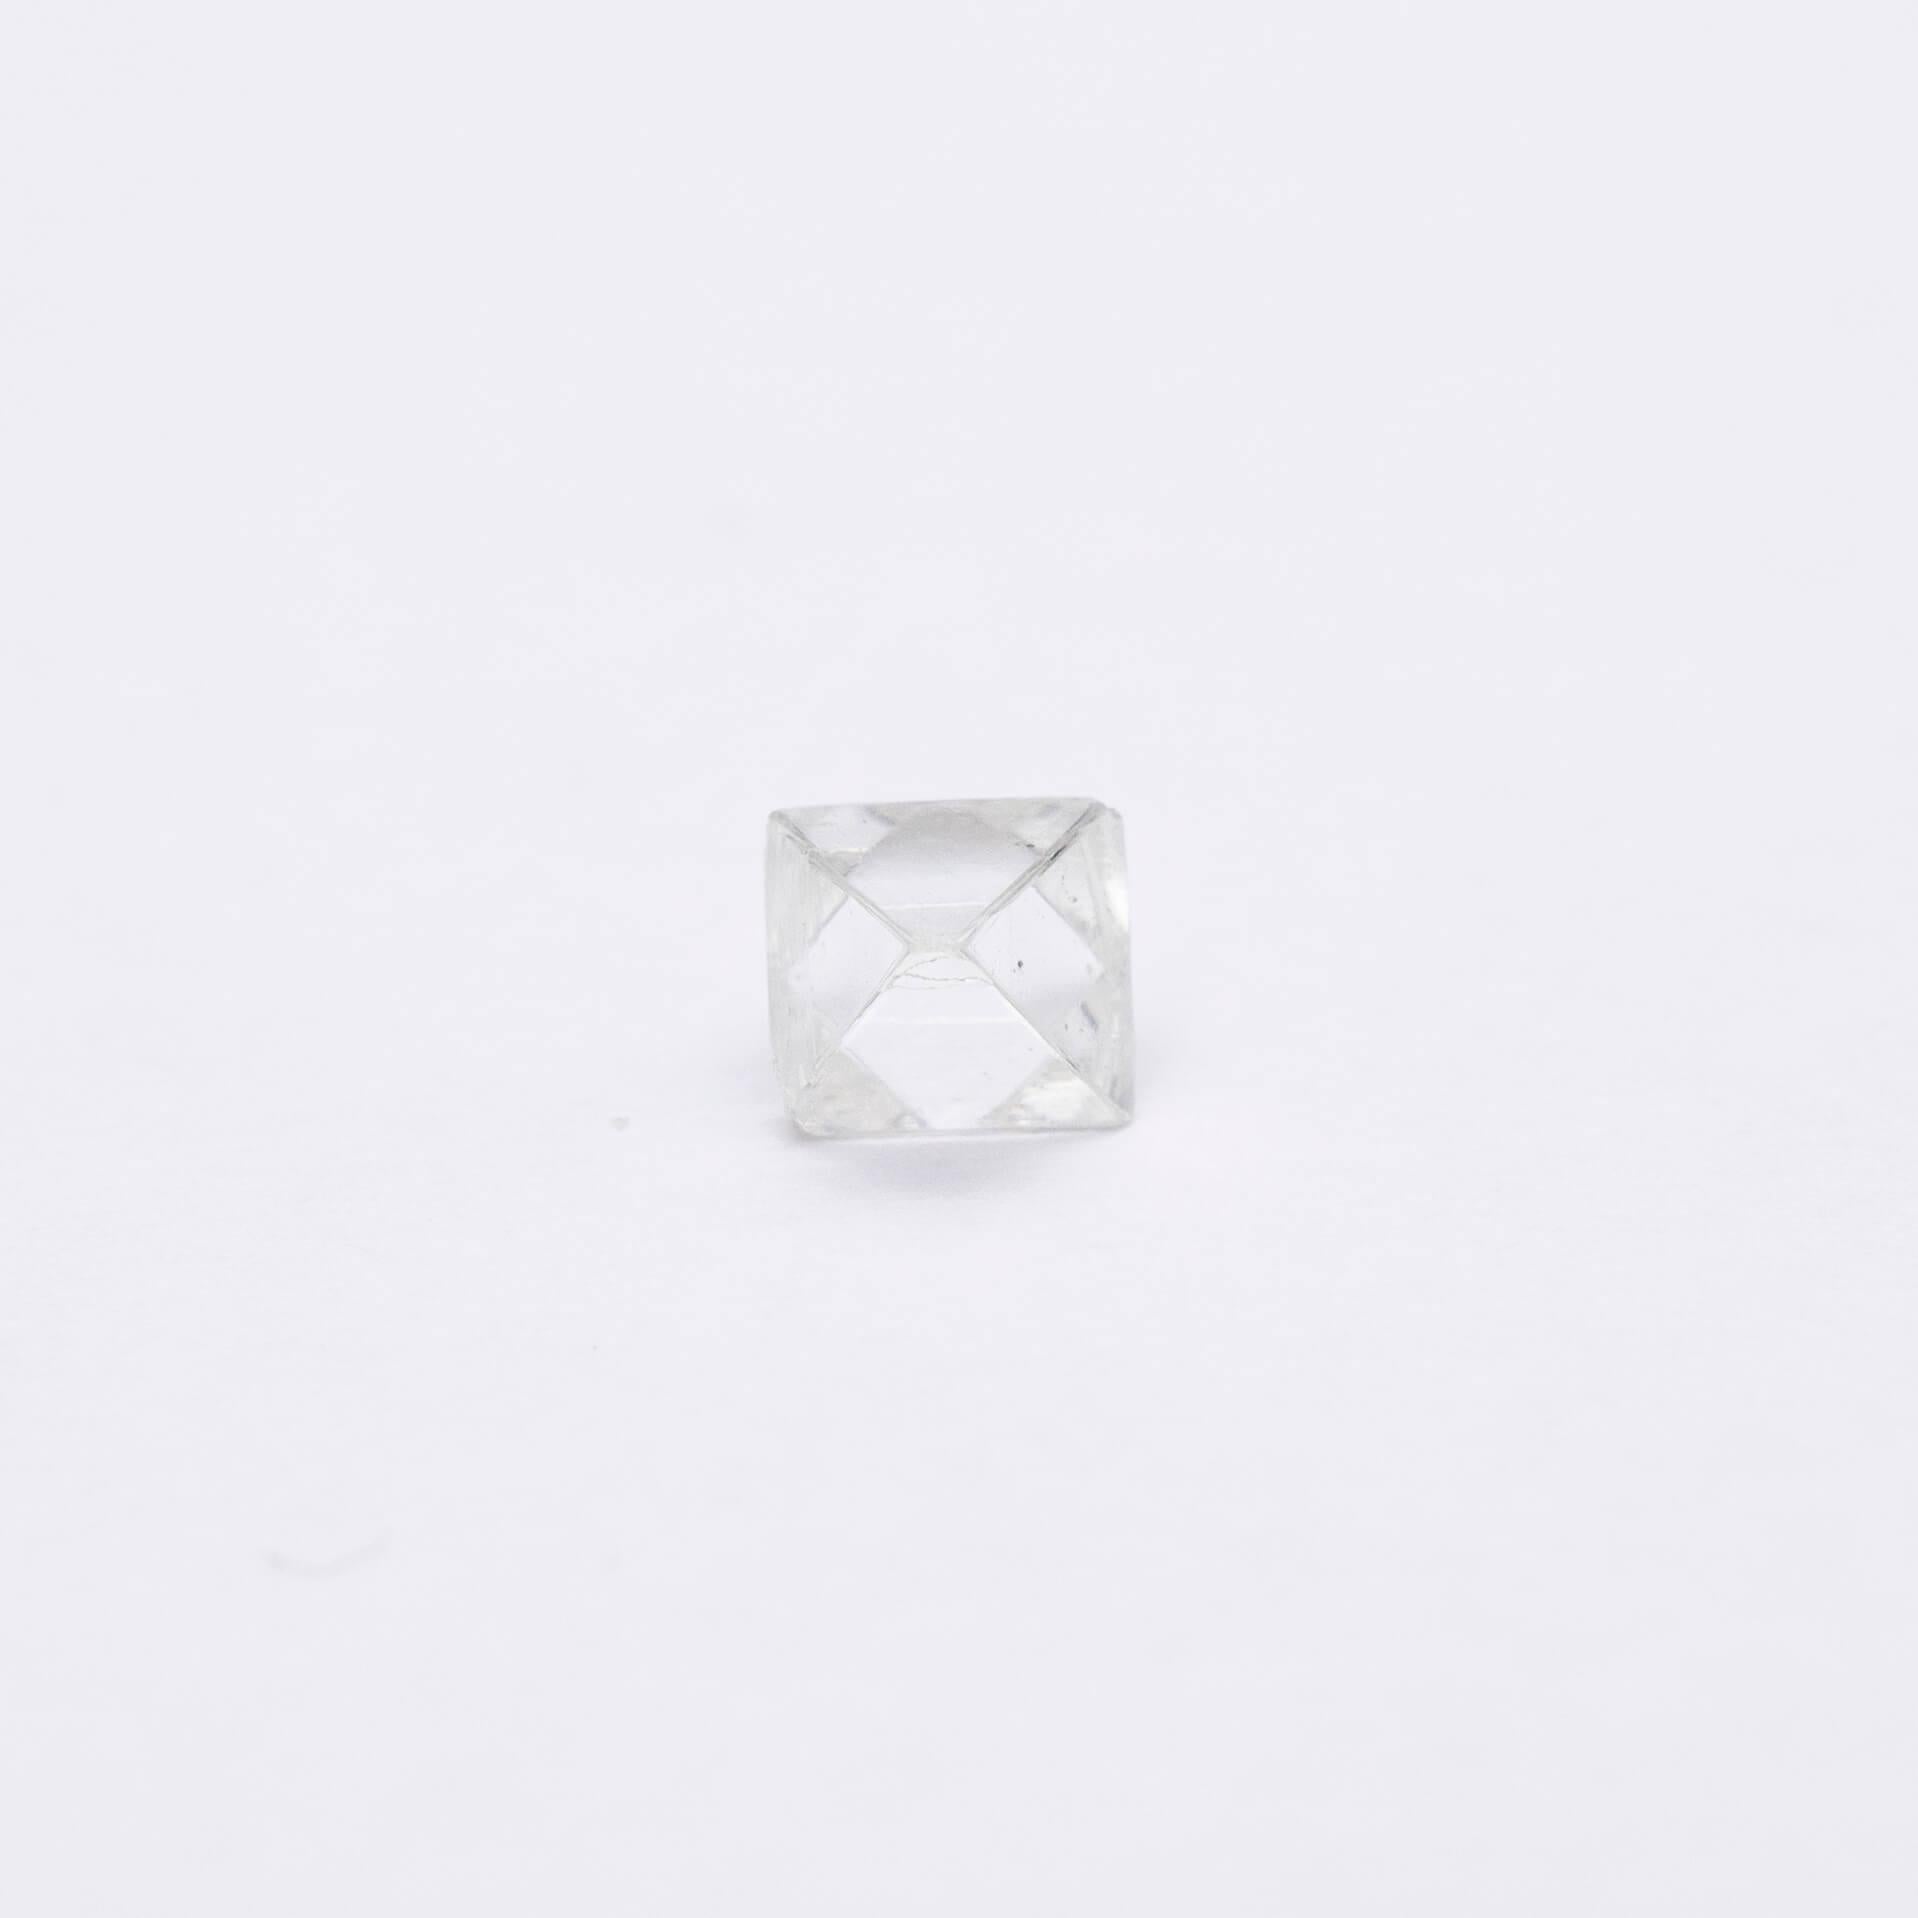 octahedron diamond rough